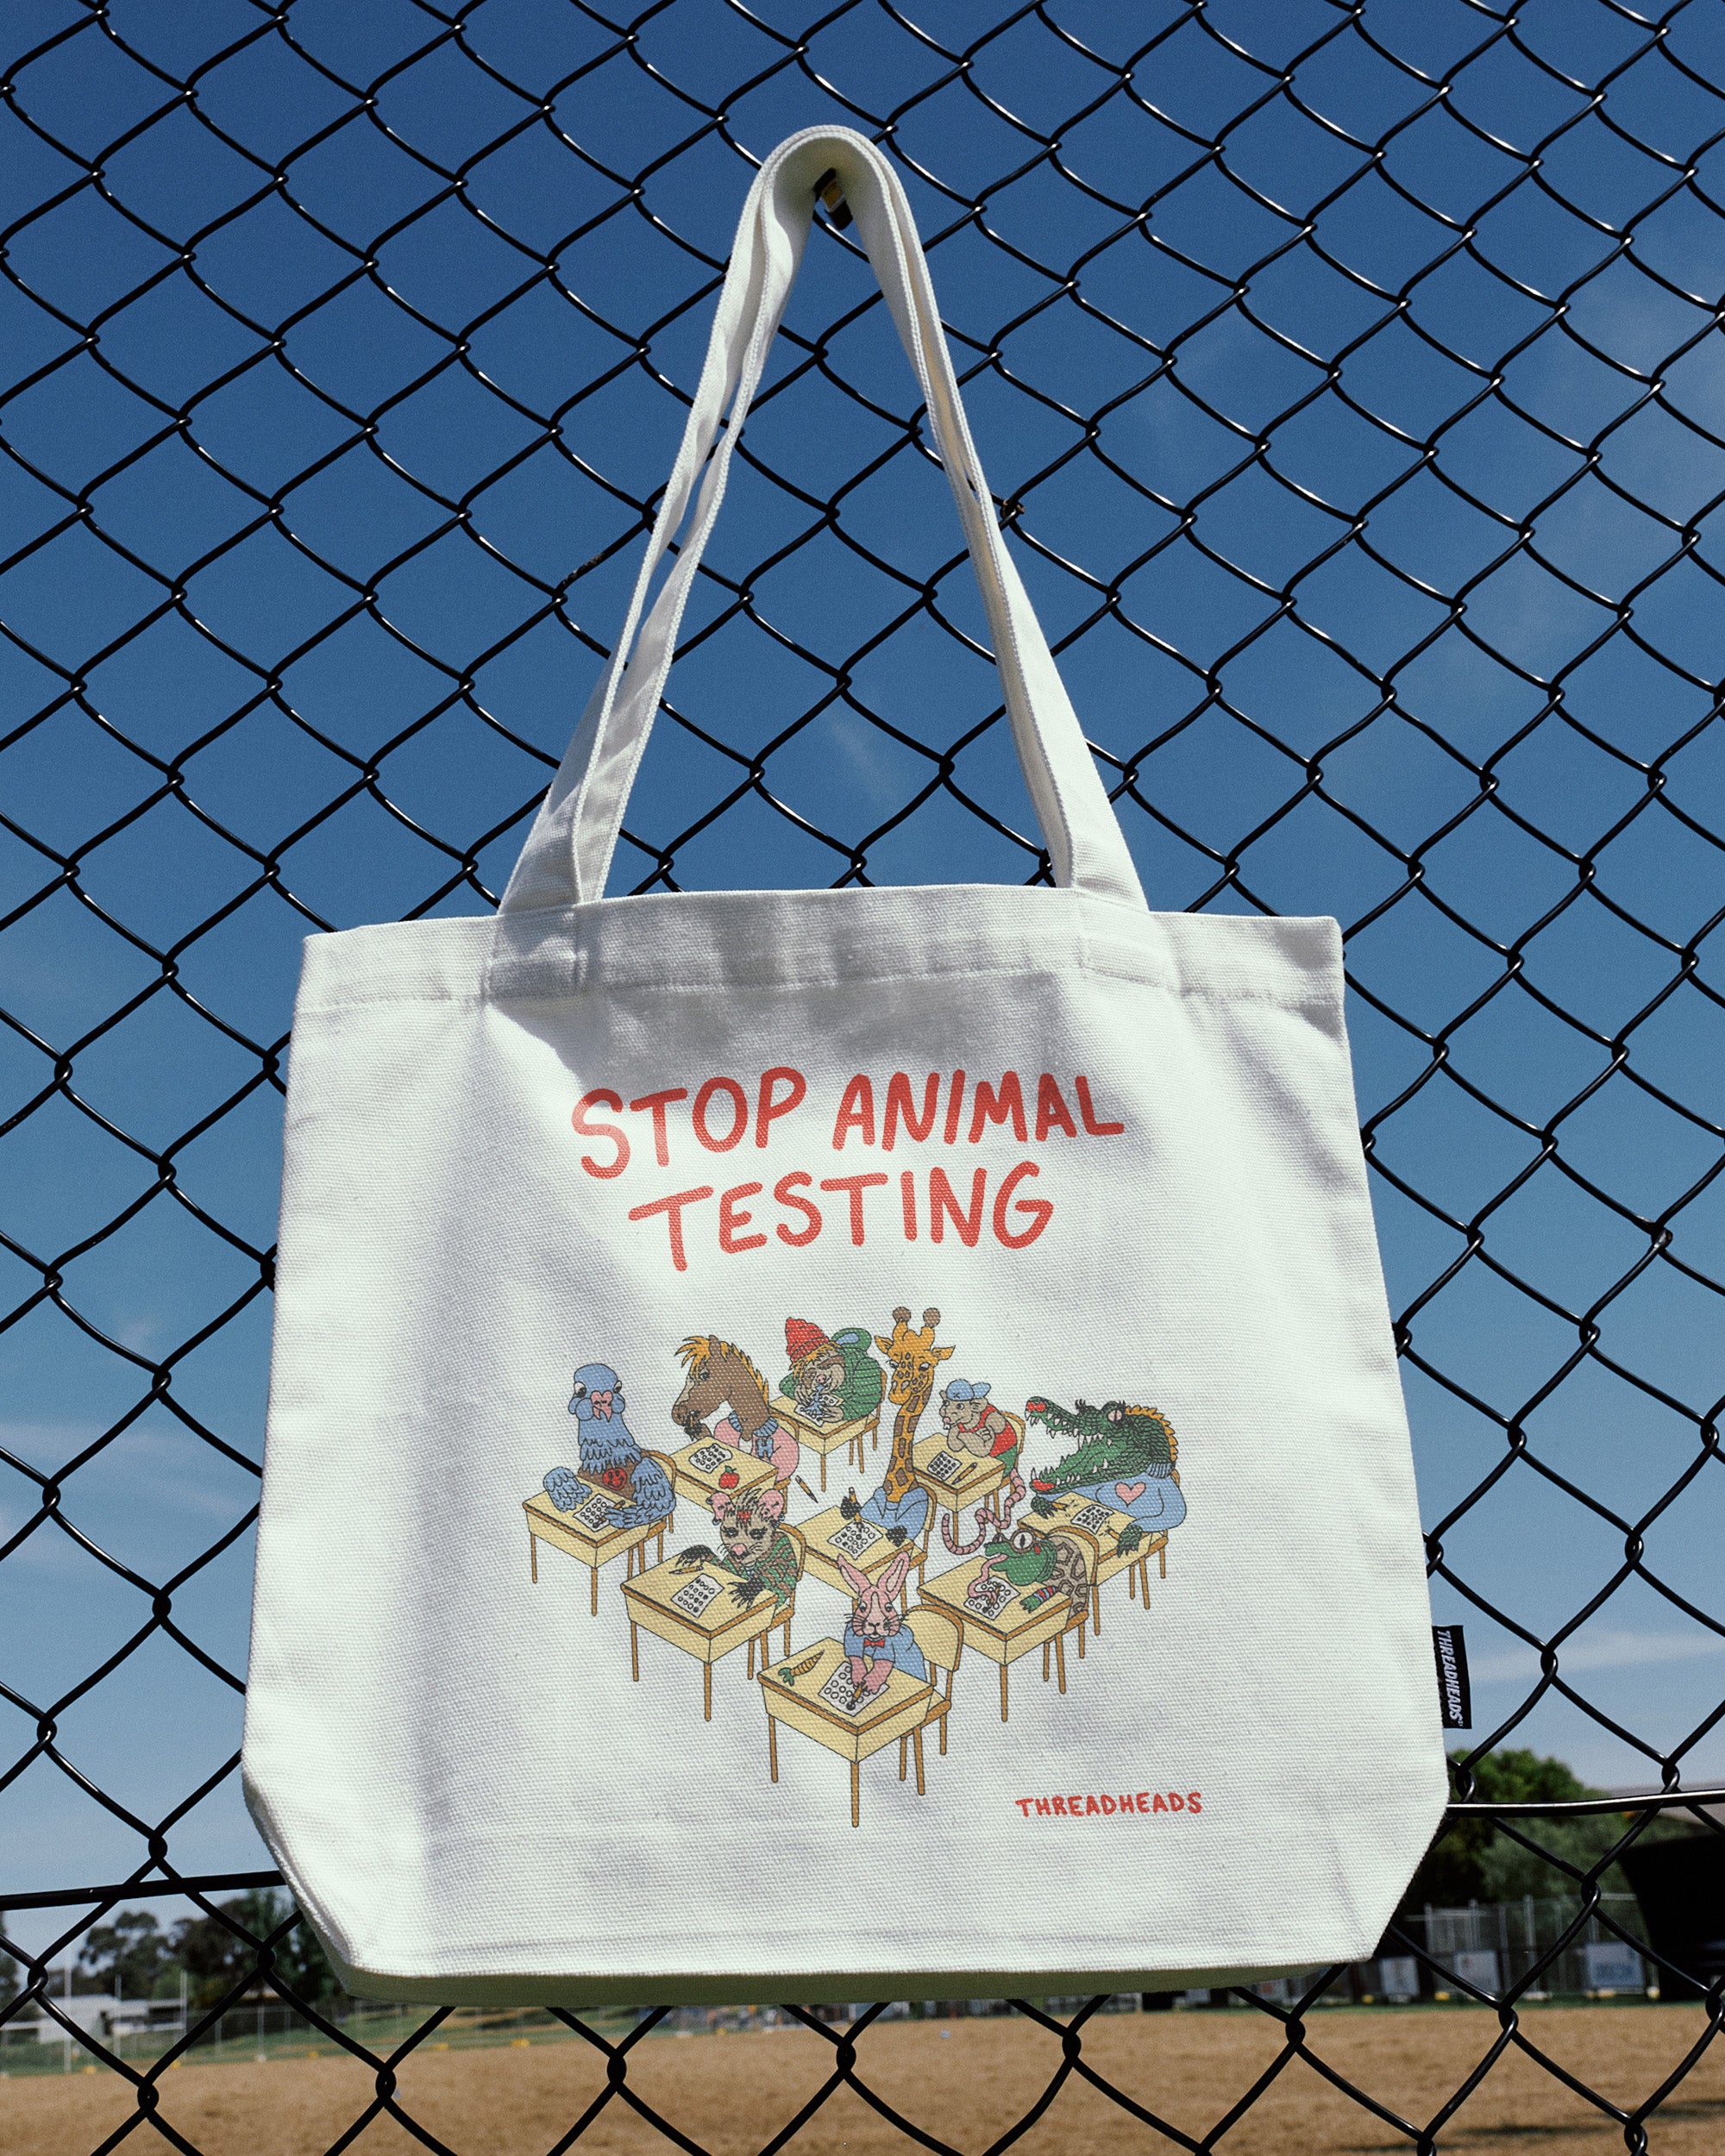 Stop Animal Testing Tote Bag